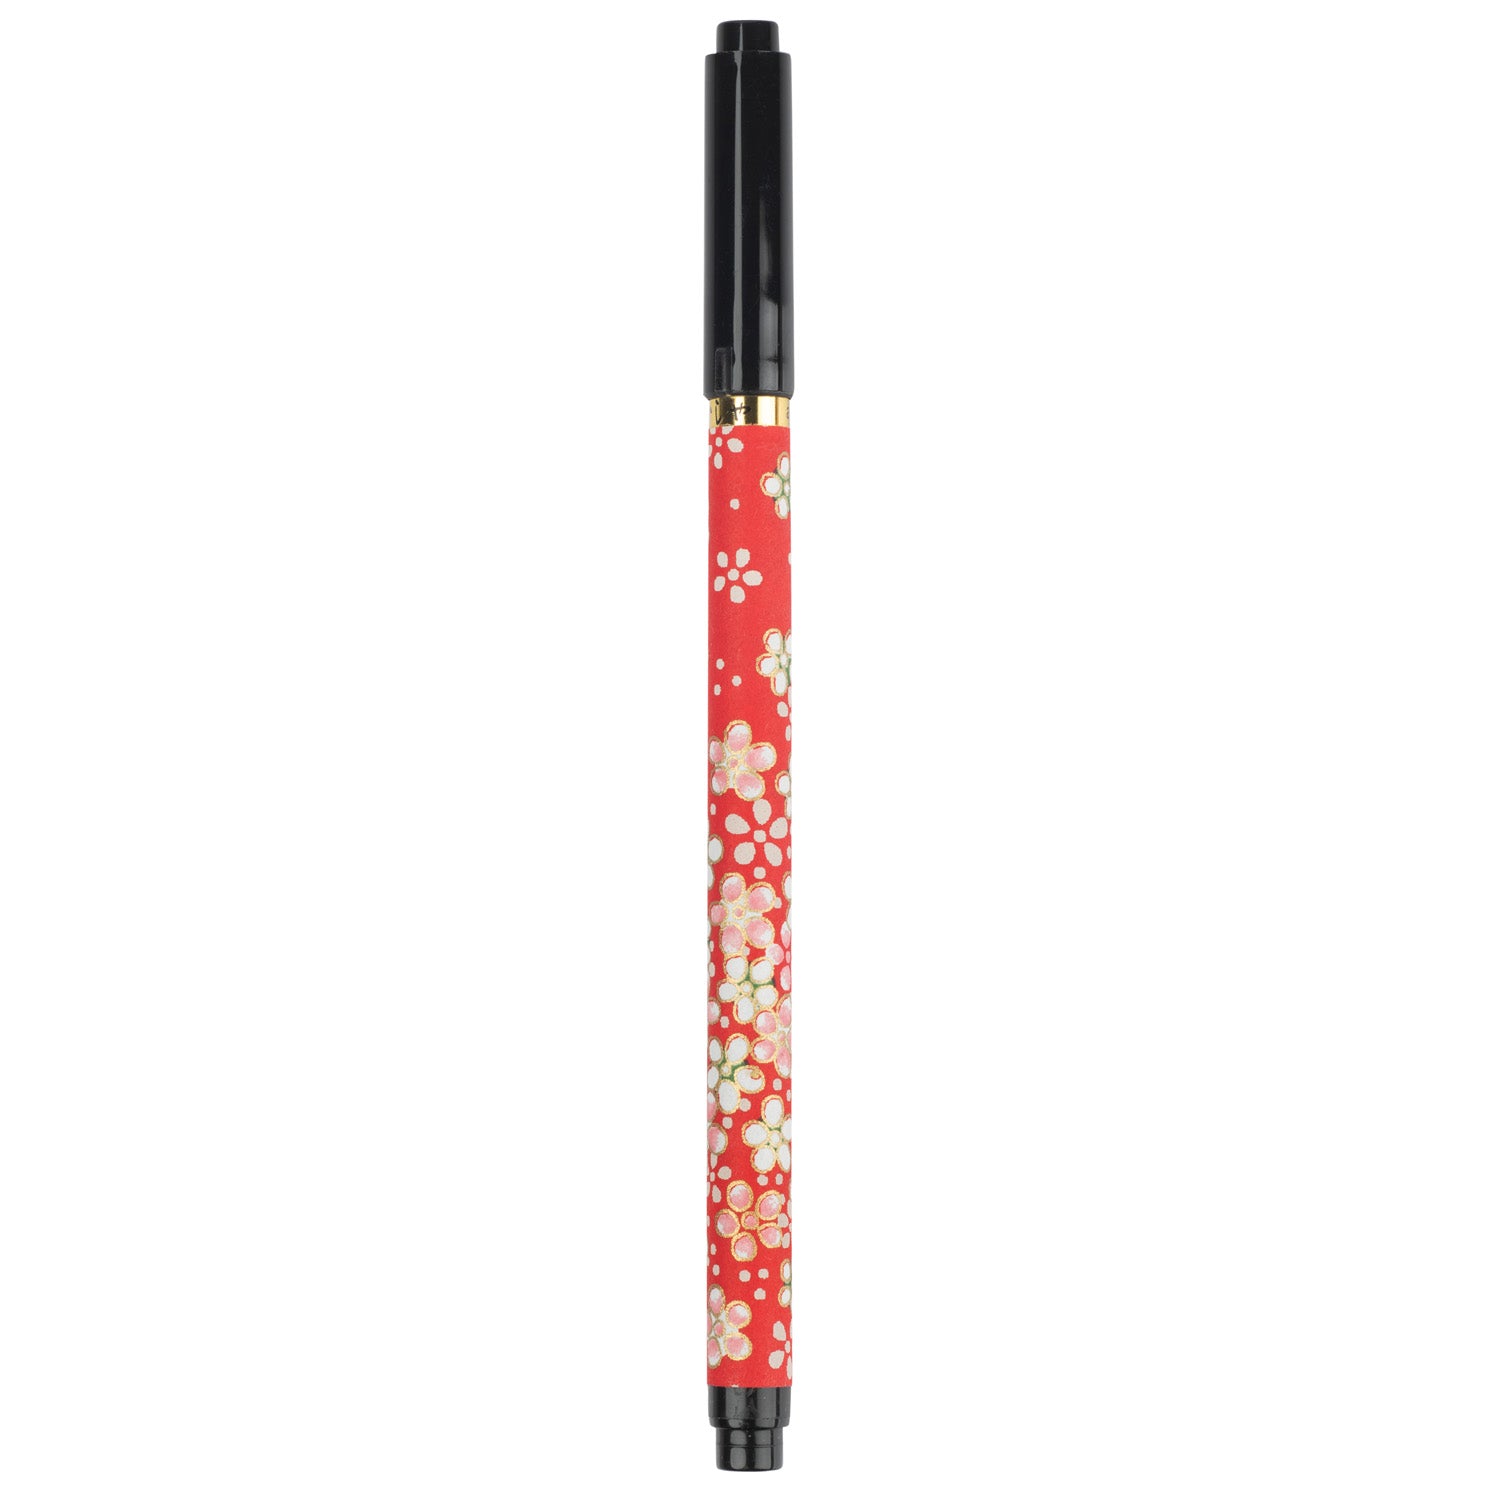 Red Koto Japanese Calligraphy Brush Pen top